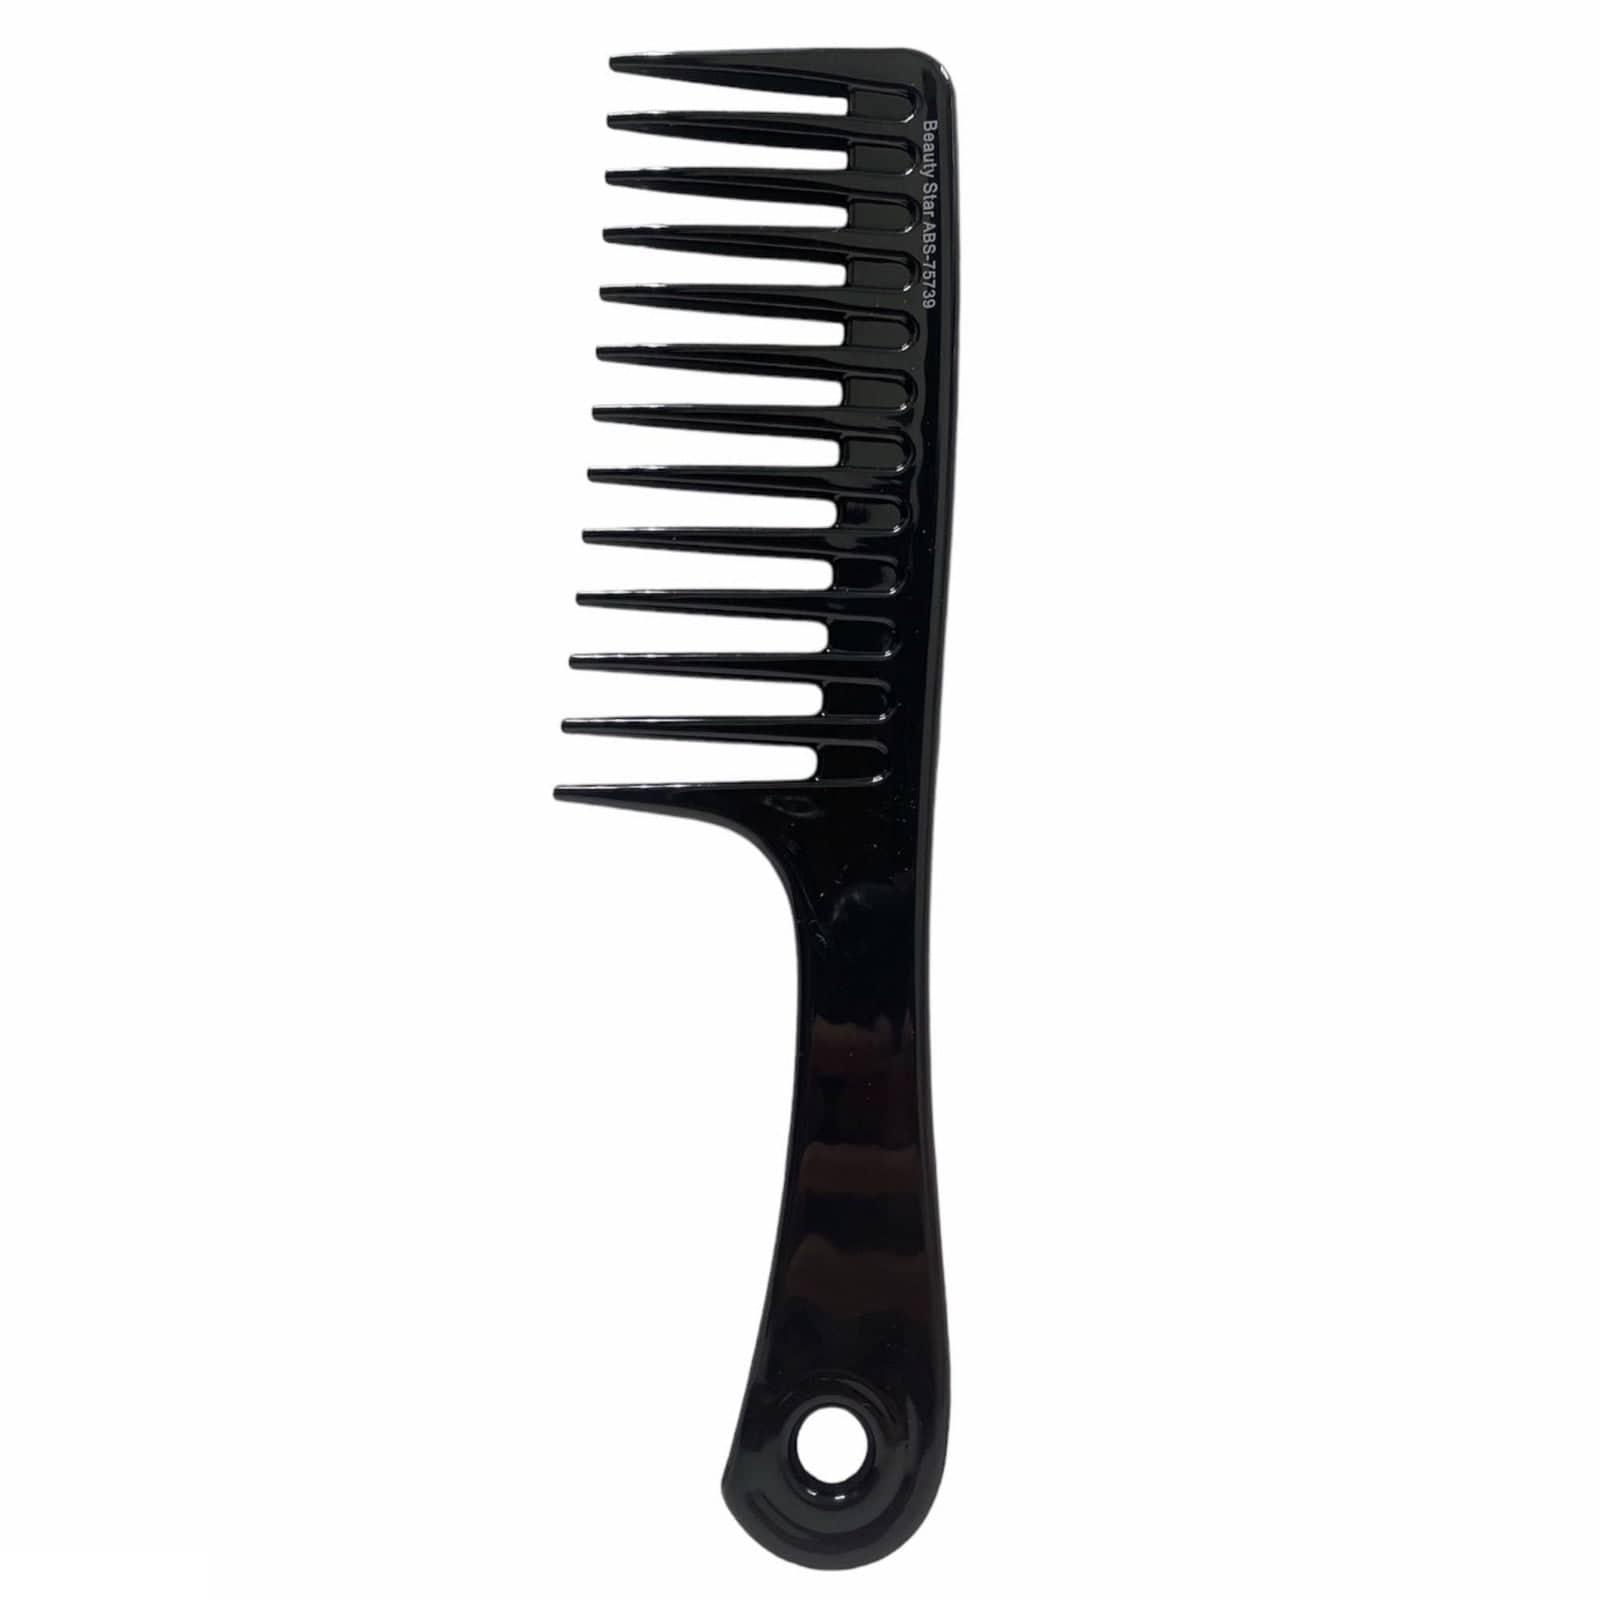 Beautystar Wide Teeth Hair Styling Comb ABS-75739